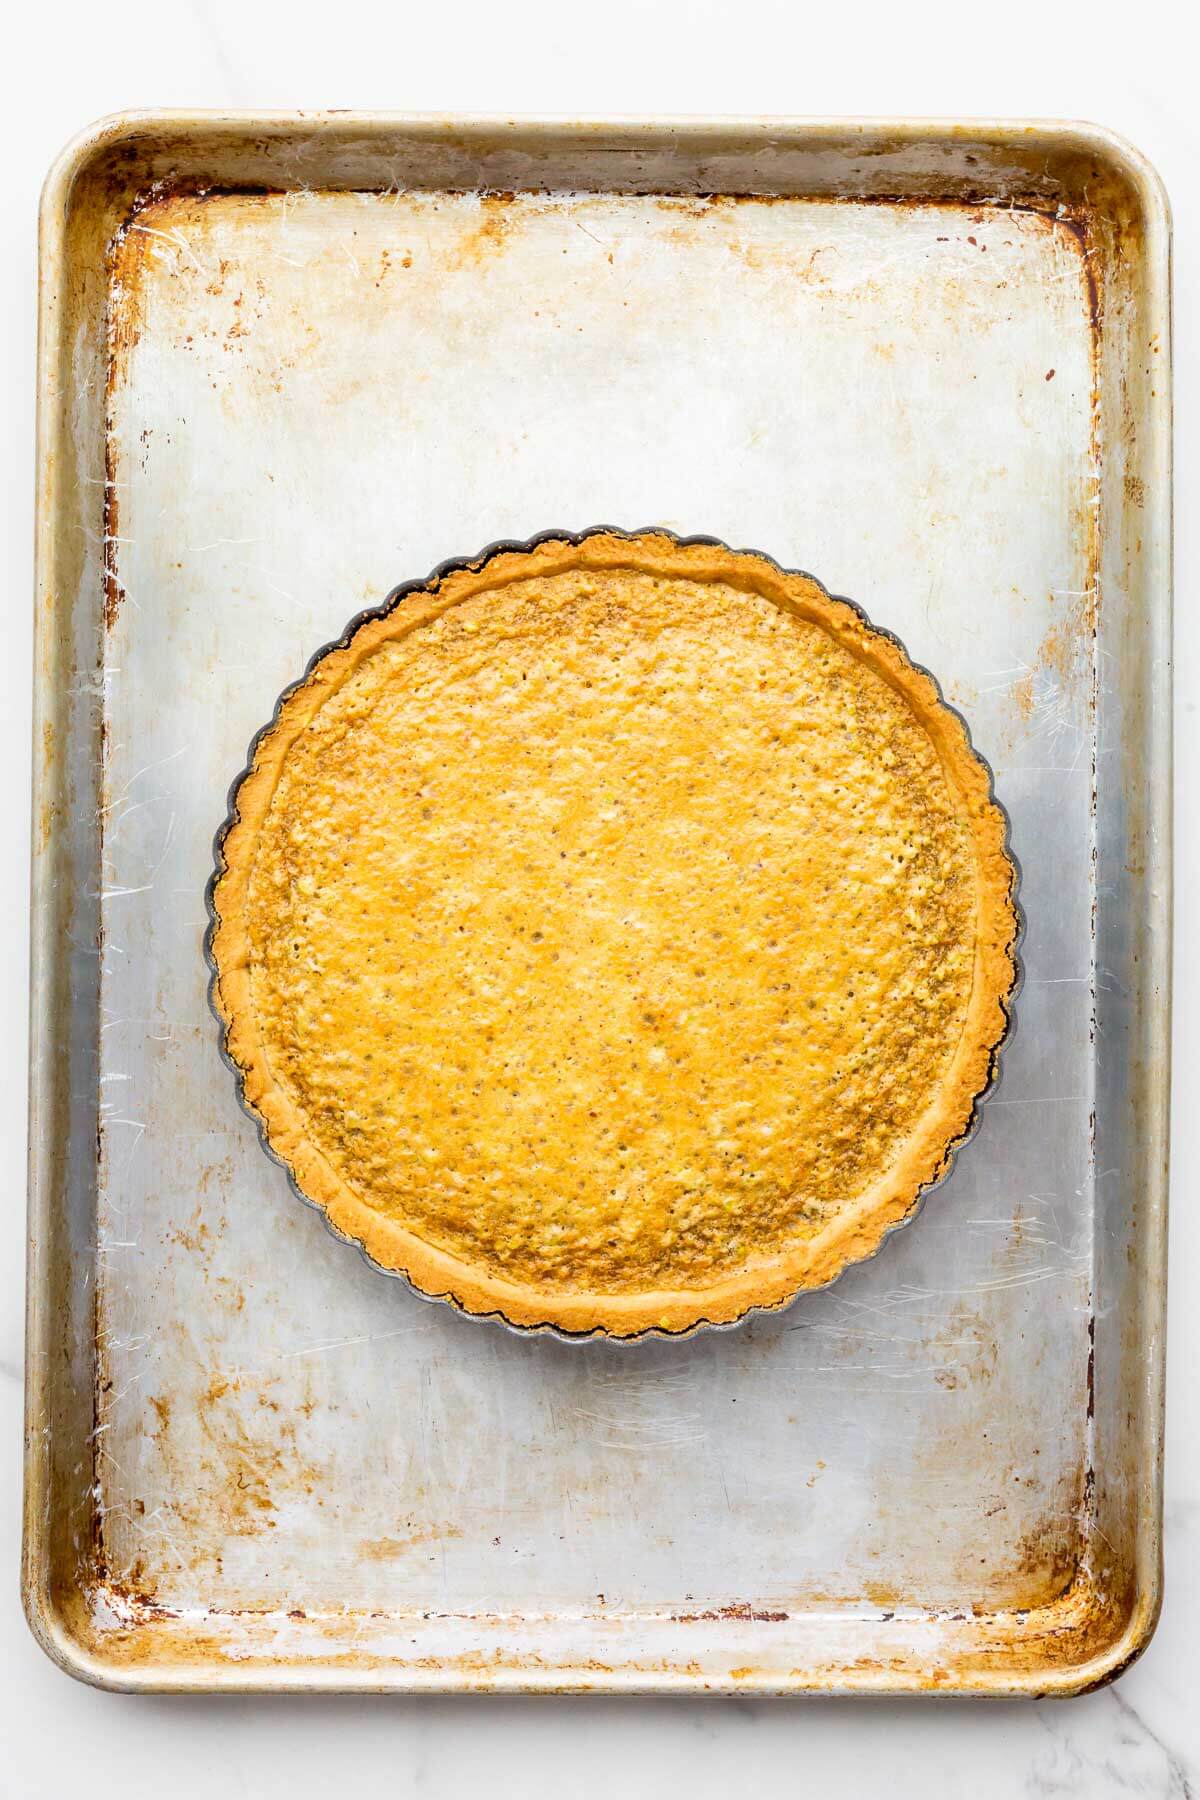 Baked pistachio tart on a sheet pan.